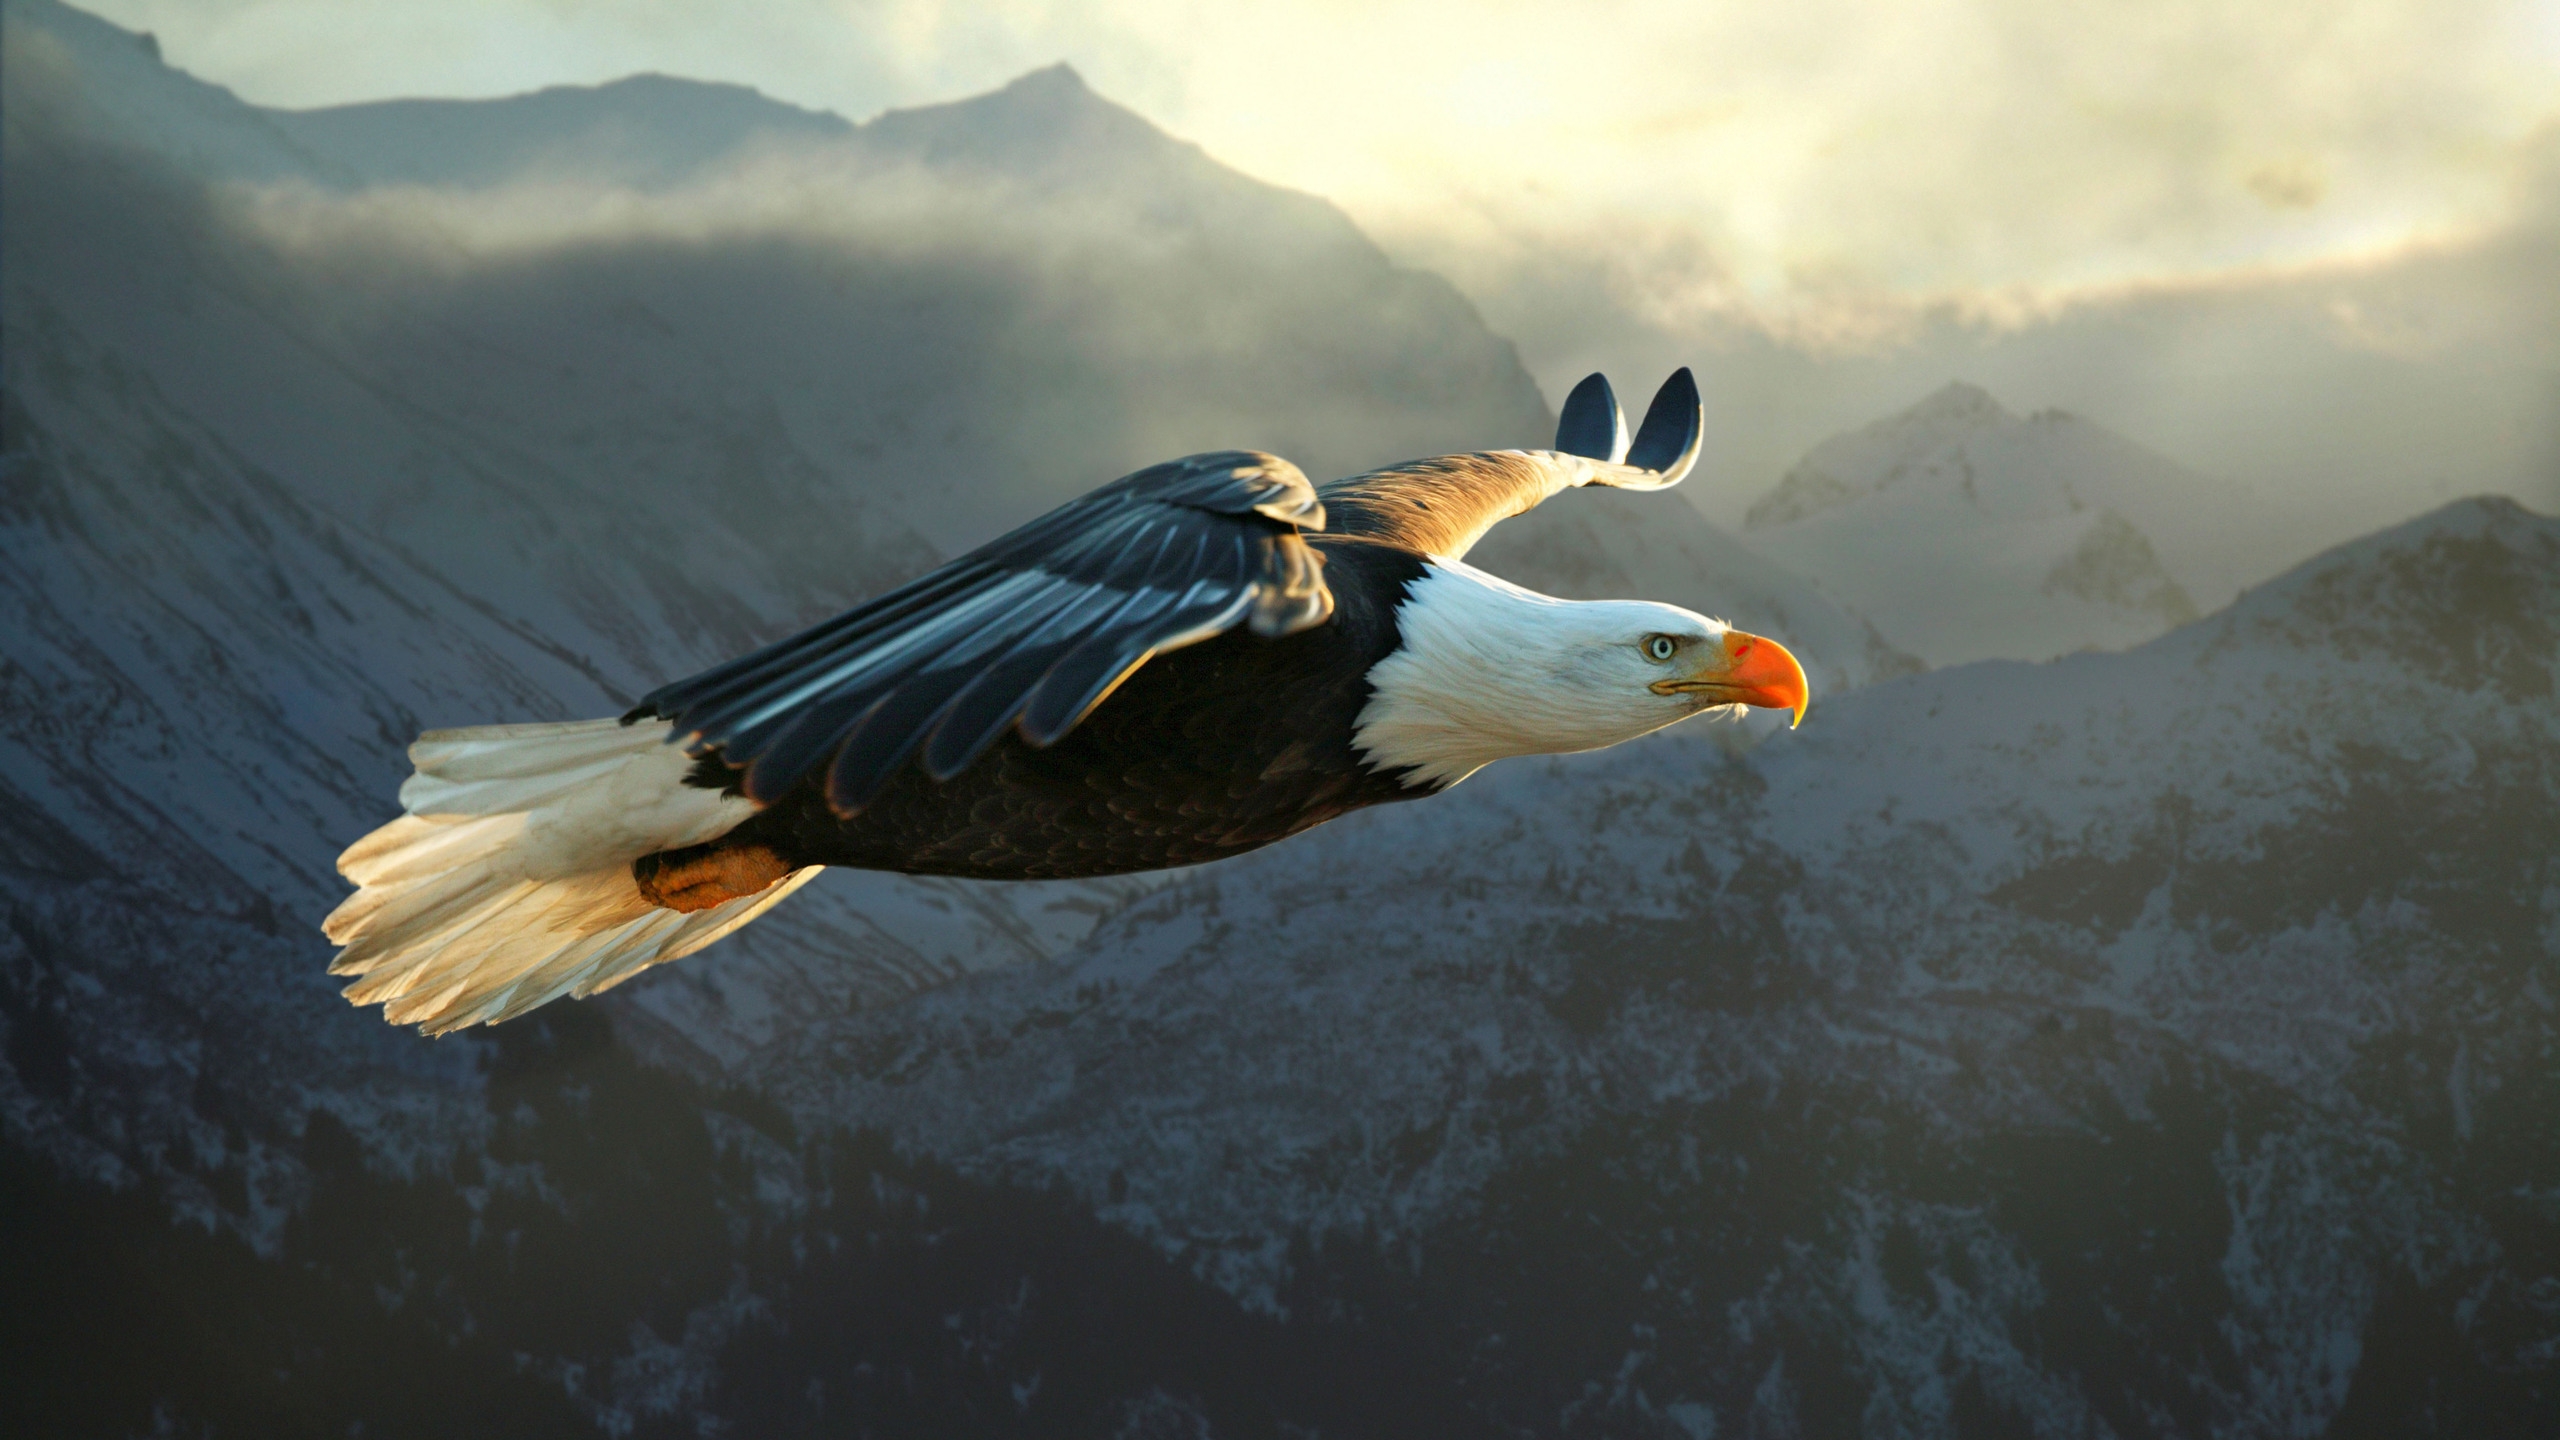 Big Eagle Flying for 2560x1440 HDTV resolution